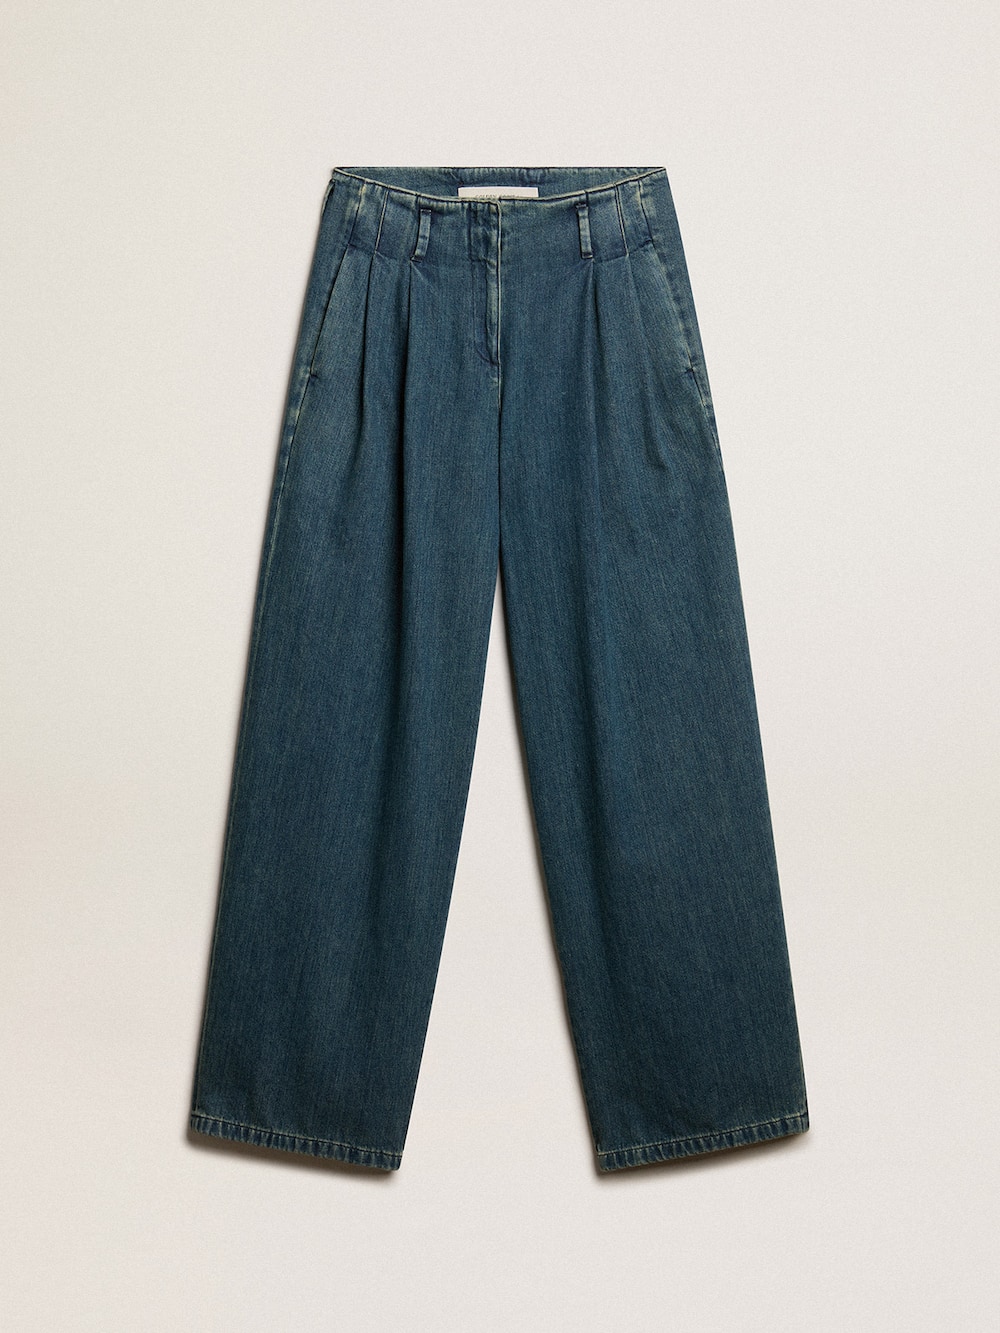 Golden Goose - Pantalón con pinzas de mujer en algodón de color azul in 